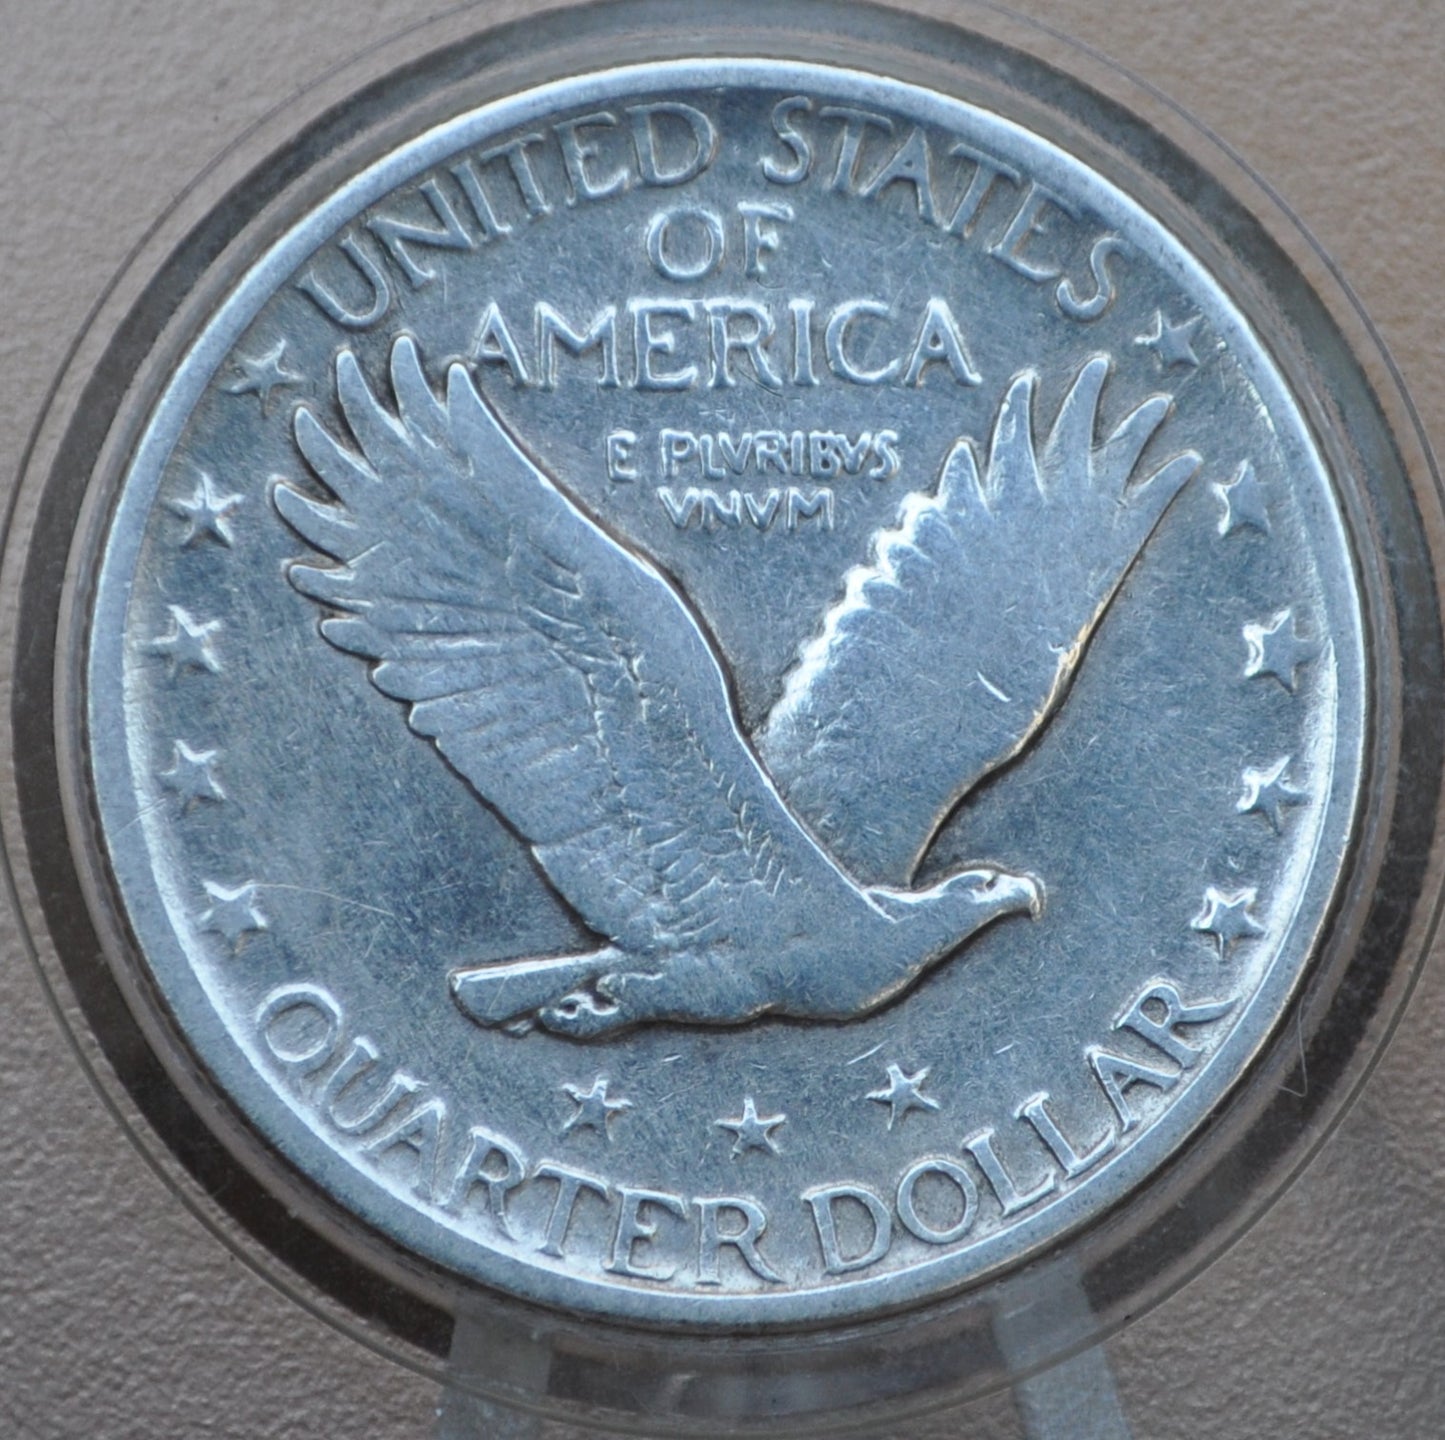 1920 Standing Liberty Quarter - F (Fine) Details, Cleaned - 1920 P Standing Liberty Standing Silver Quarter - Better Date